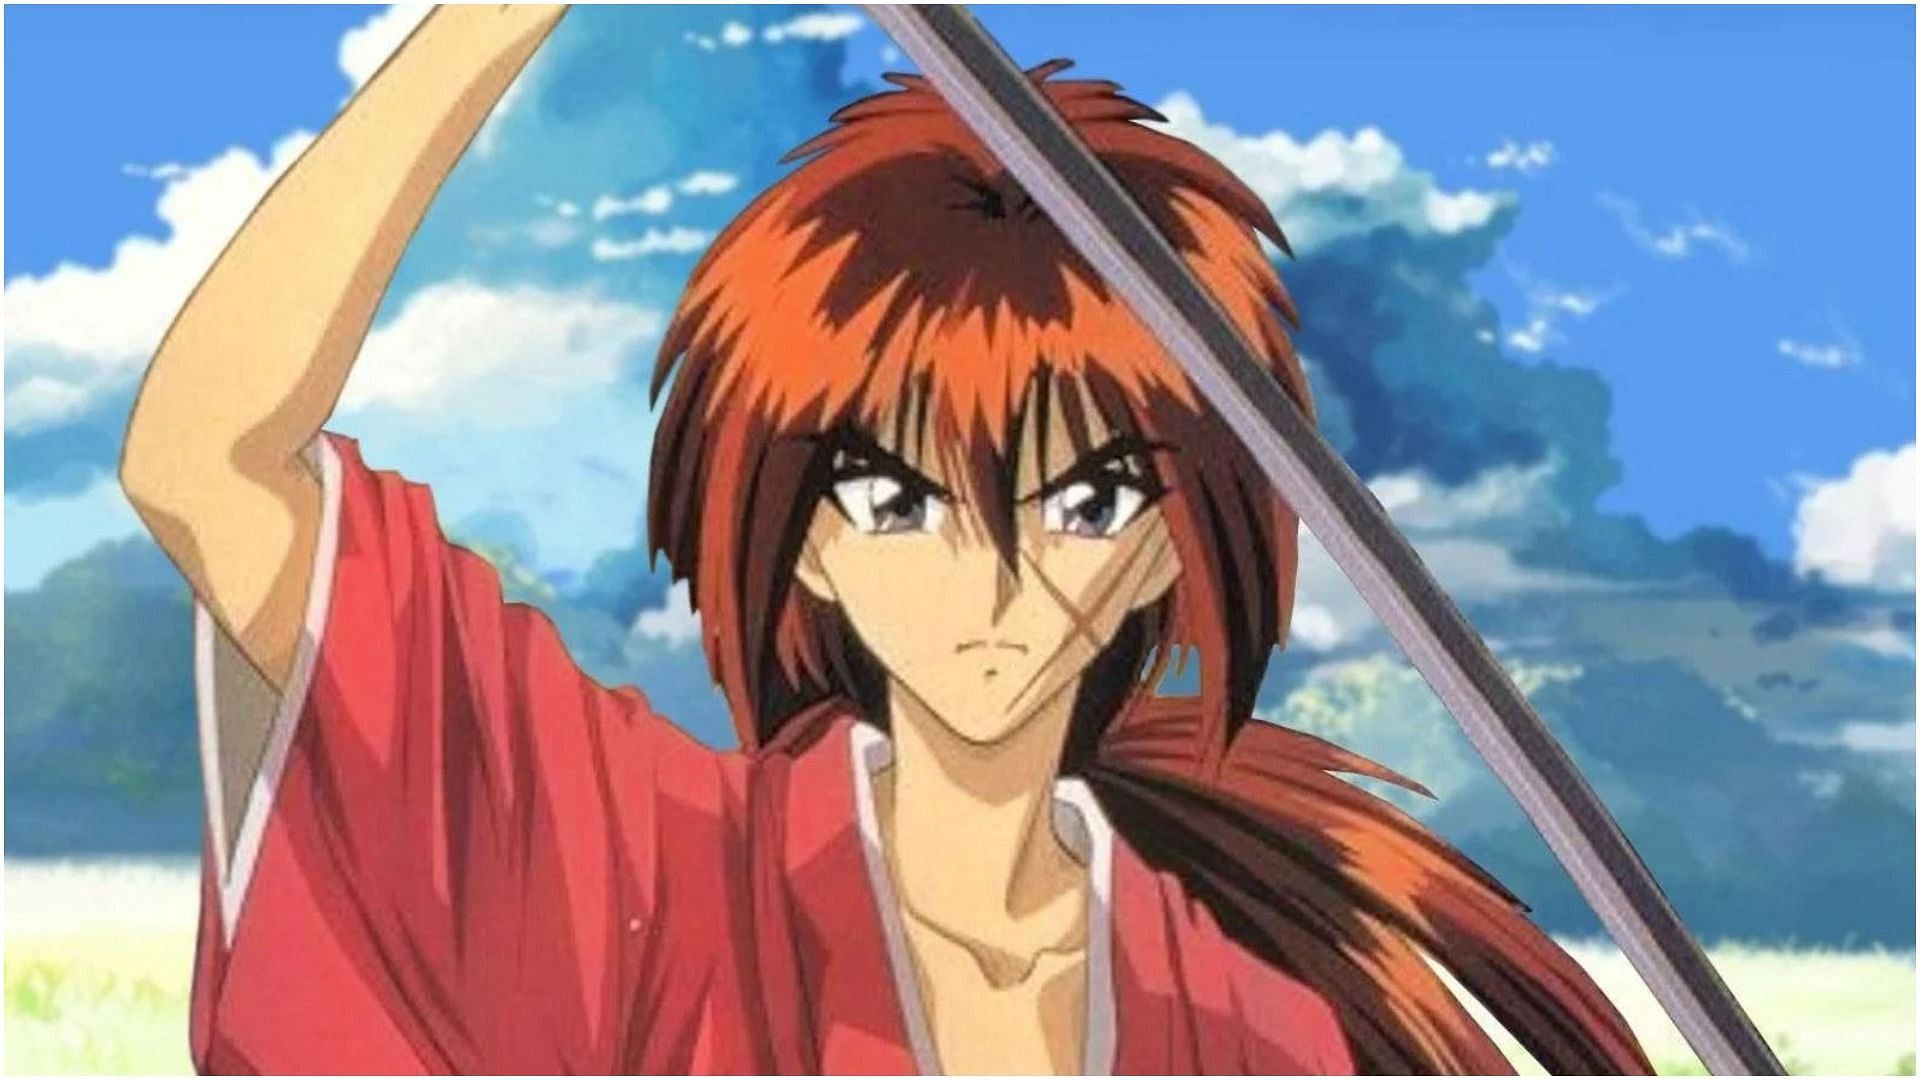 Kenshin Himura as seen in the anime Ruruoni Kenshin (Image via Studio Gallop)